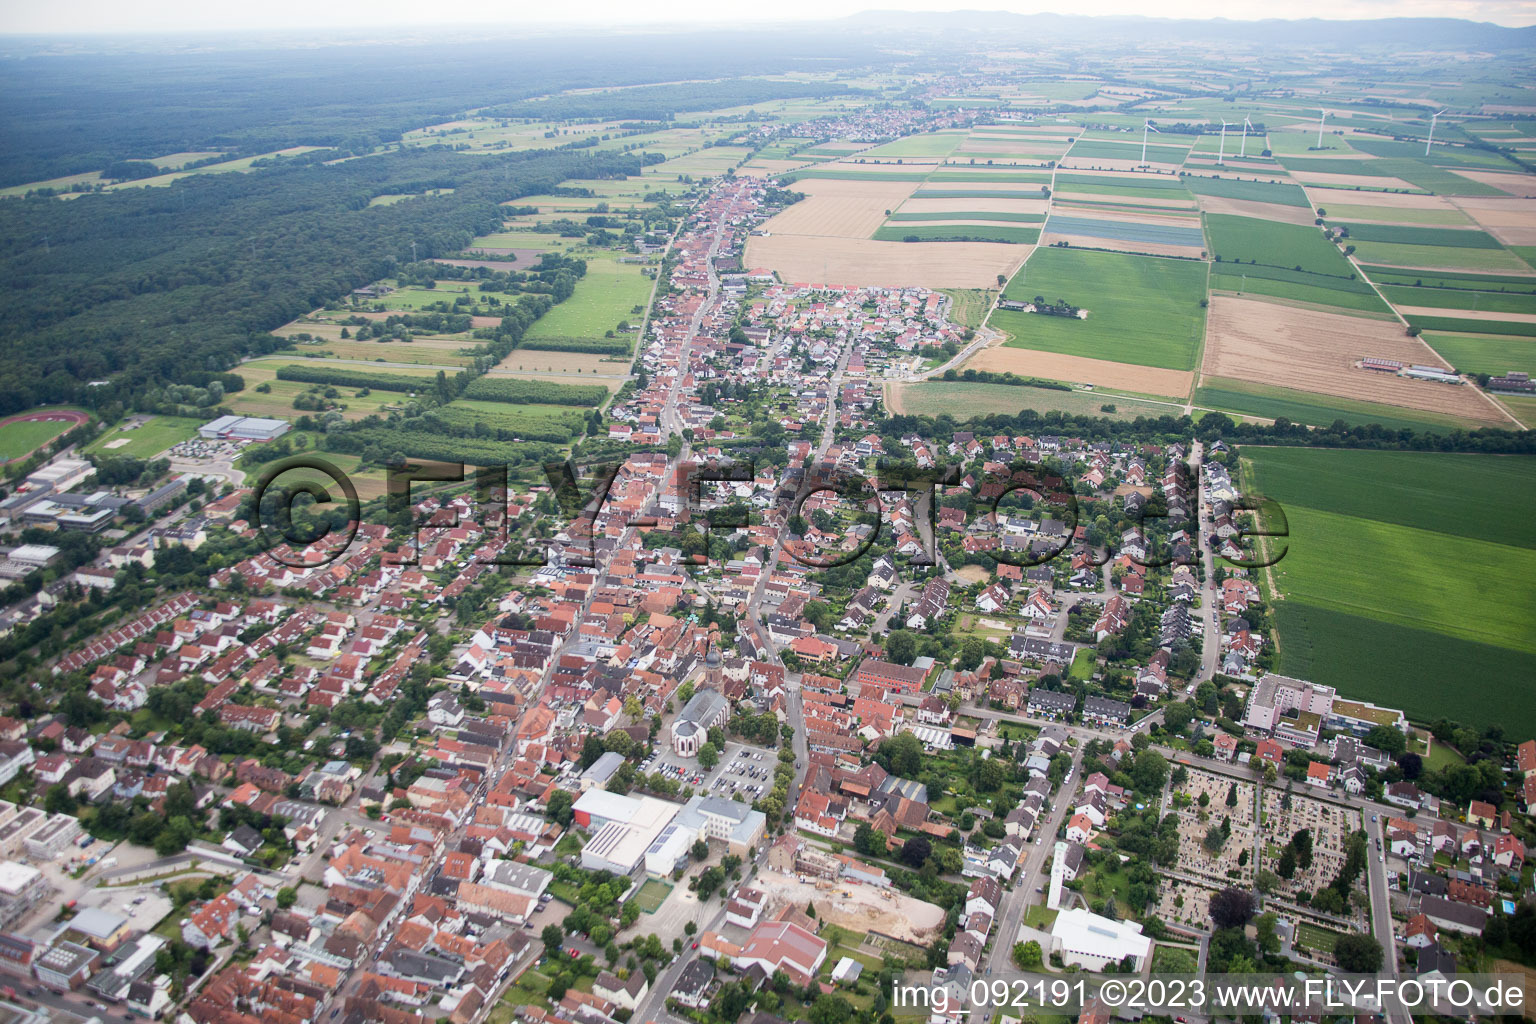 Bird's eye view of Kandel in the state Rhineland-Palatinate, Germany